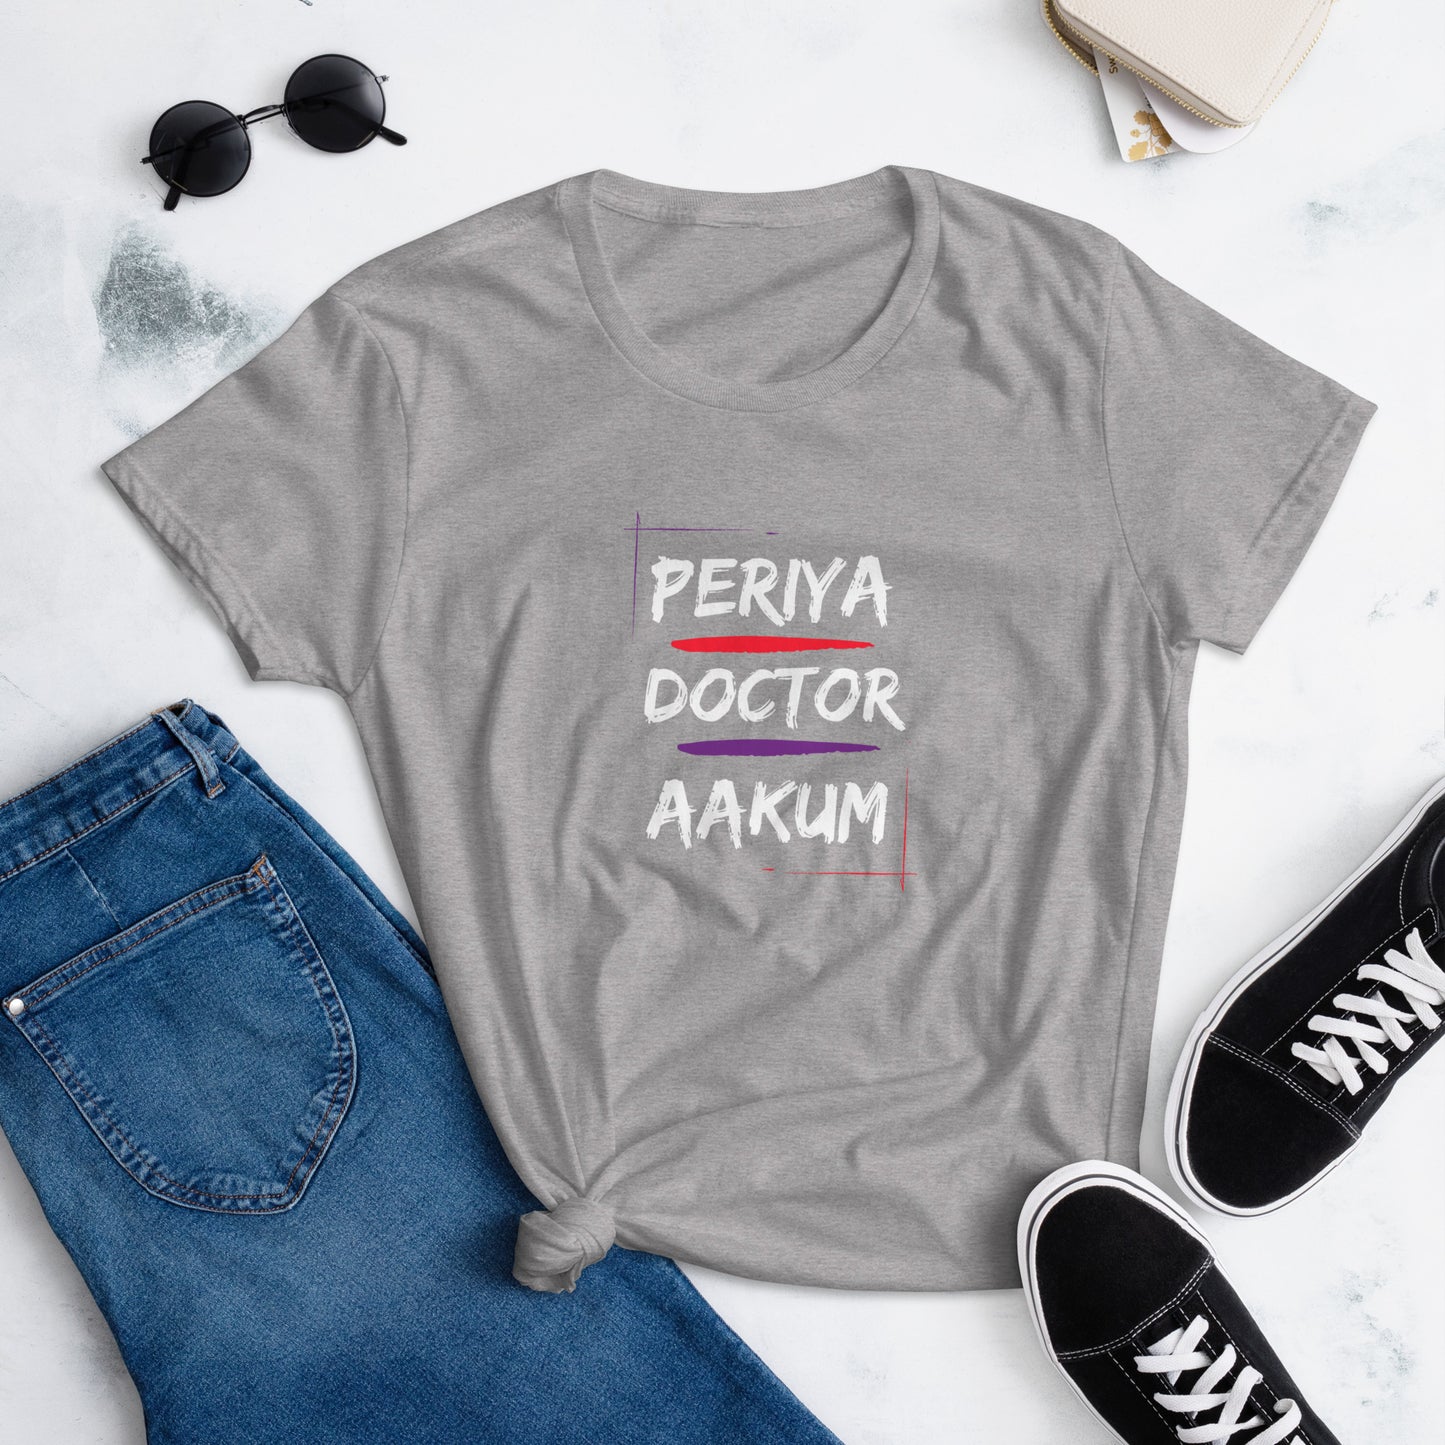 Periya Doctor aakum Women's short sleeve t-shirt